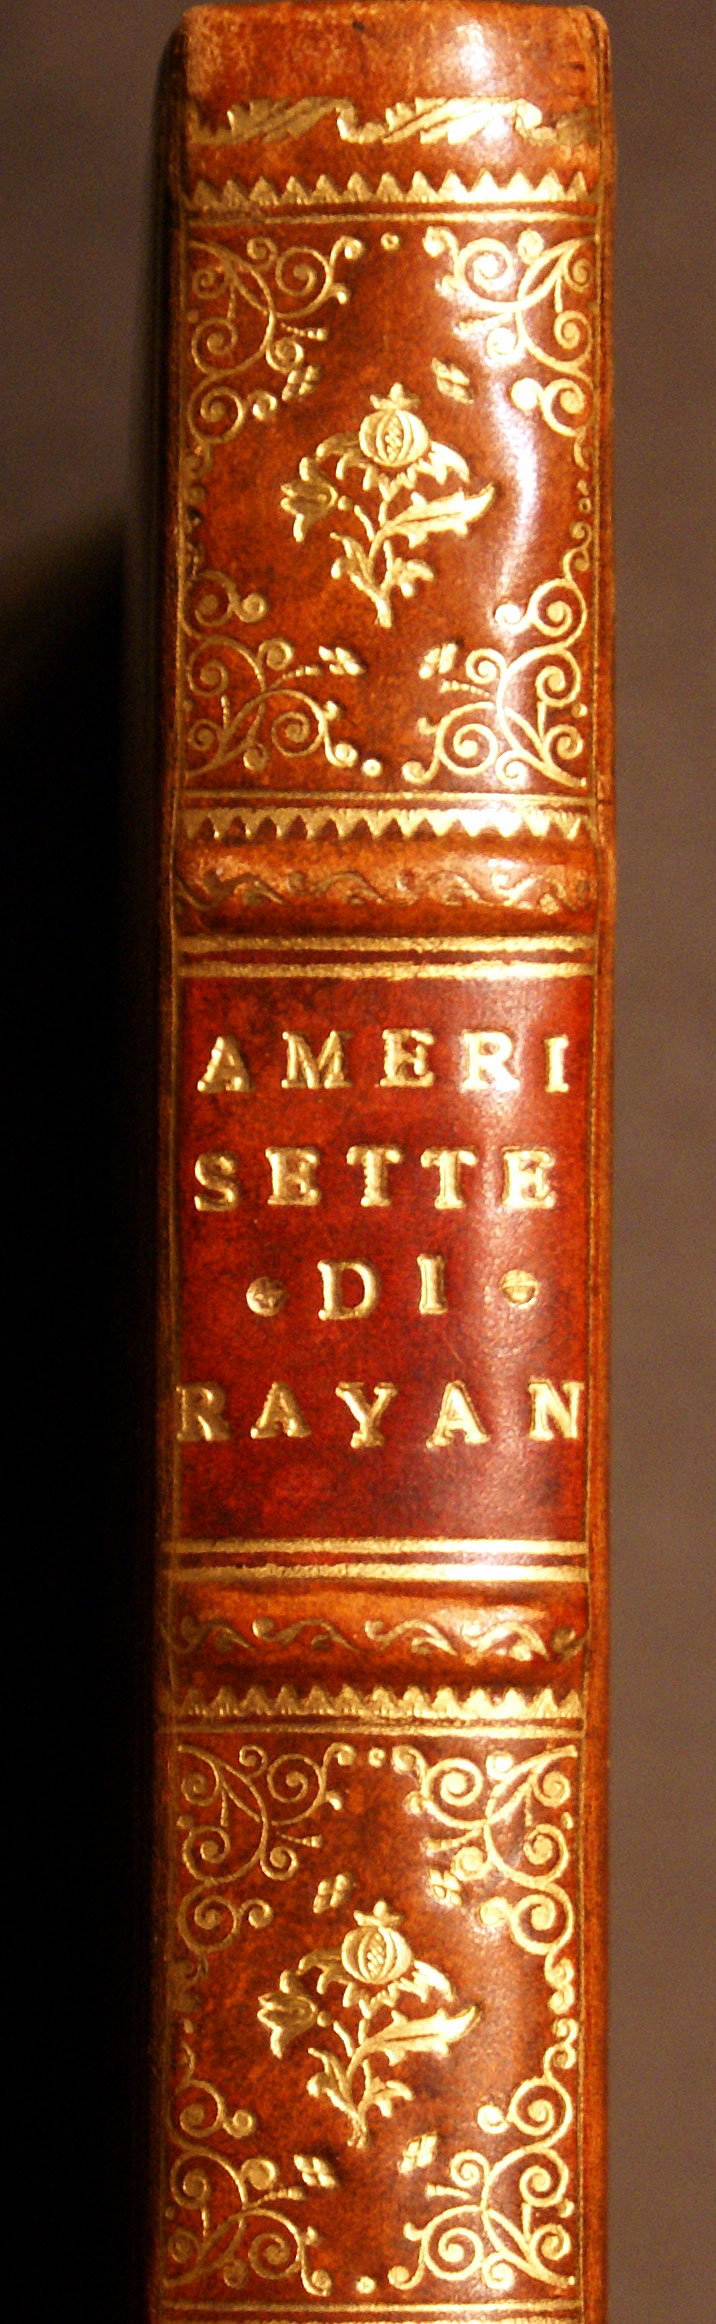 c 1778 Zatta Atlas - 1st Italian Ed of Mitchell North America